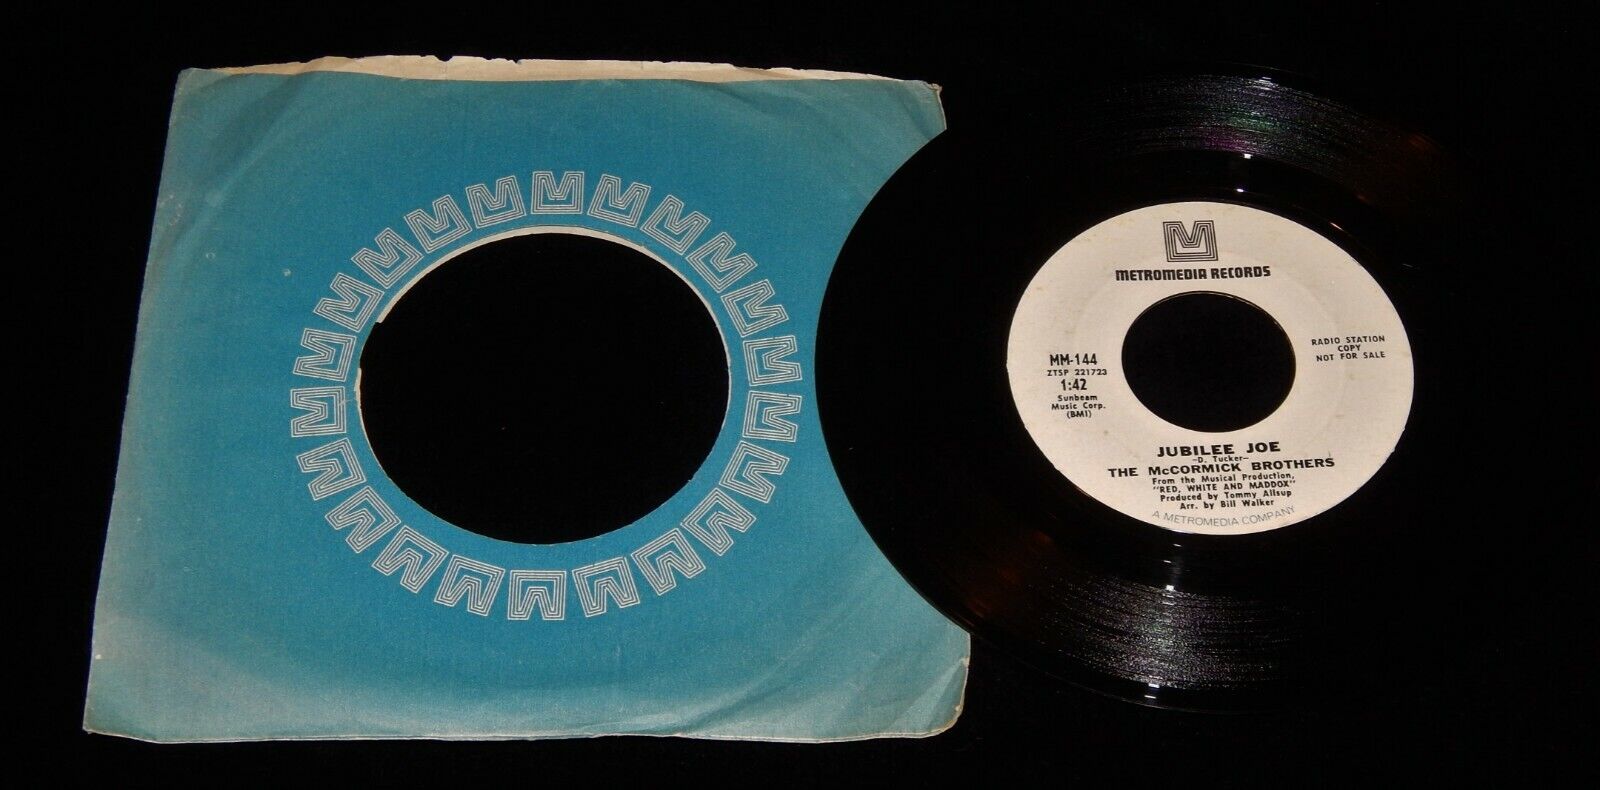 Vintage Record,THE McCORMICK BROTHERS:BAD MOON RISING & JUBILEE JOE,PROMO,45 rpm